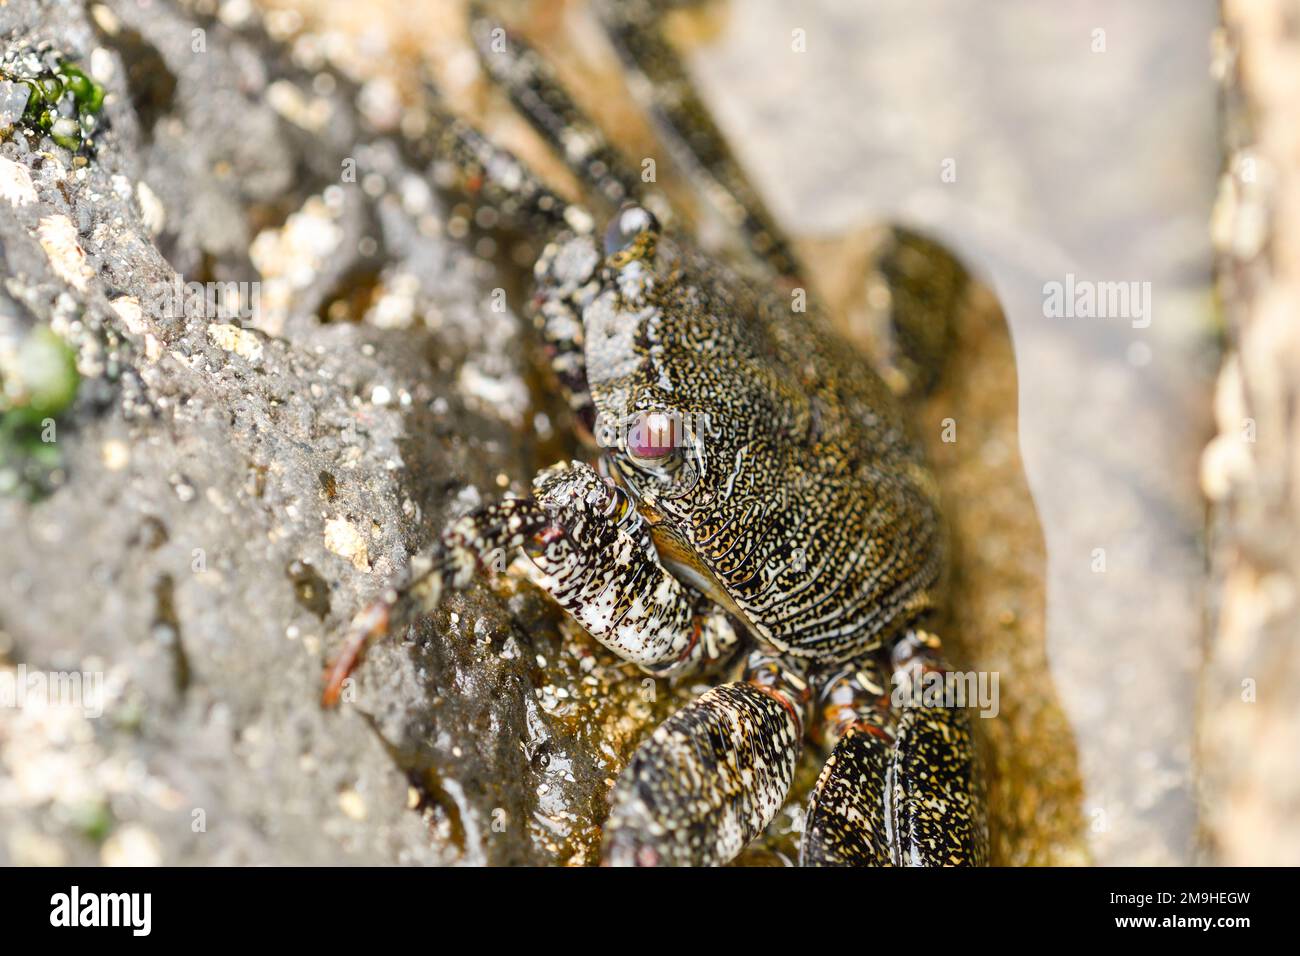 Close-up of Moorish crab among the volcanic rocks of La Graciosa Stock Photo